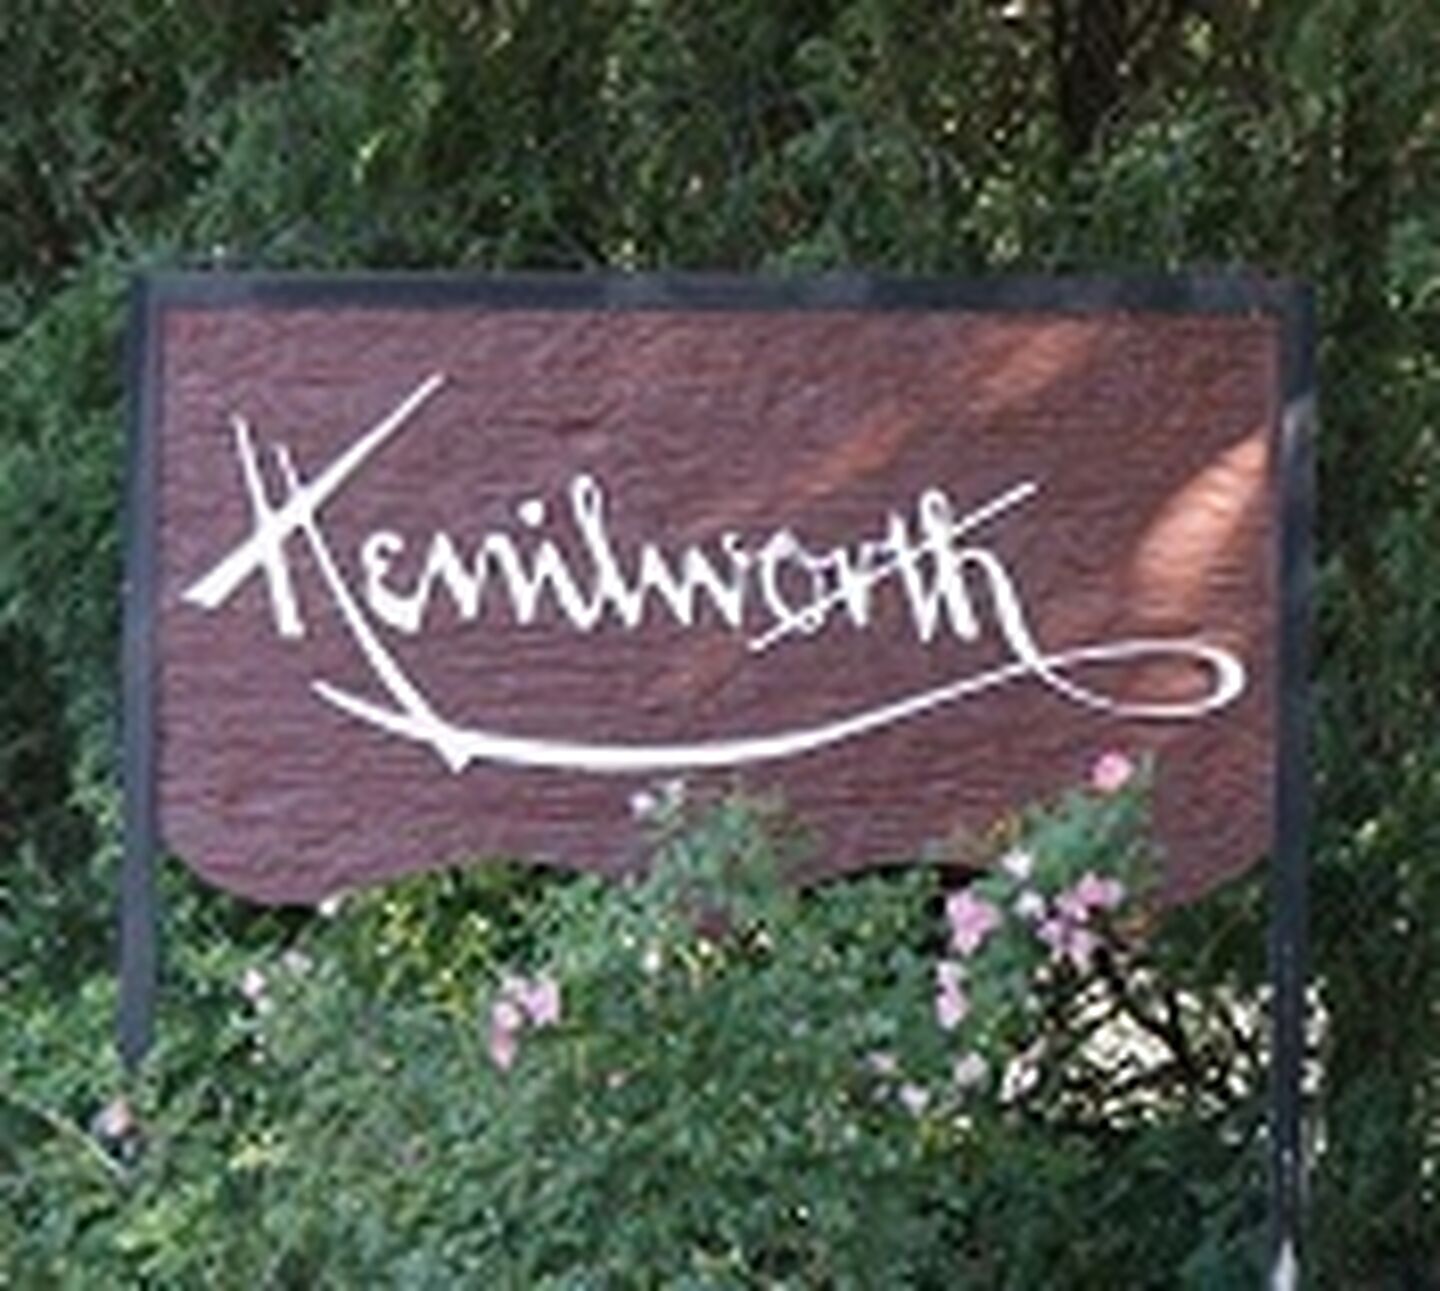 Kenilworth